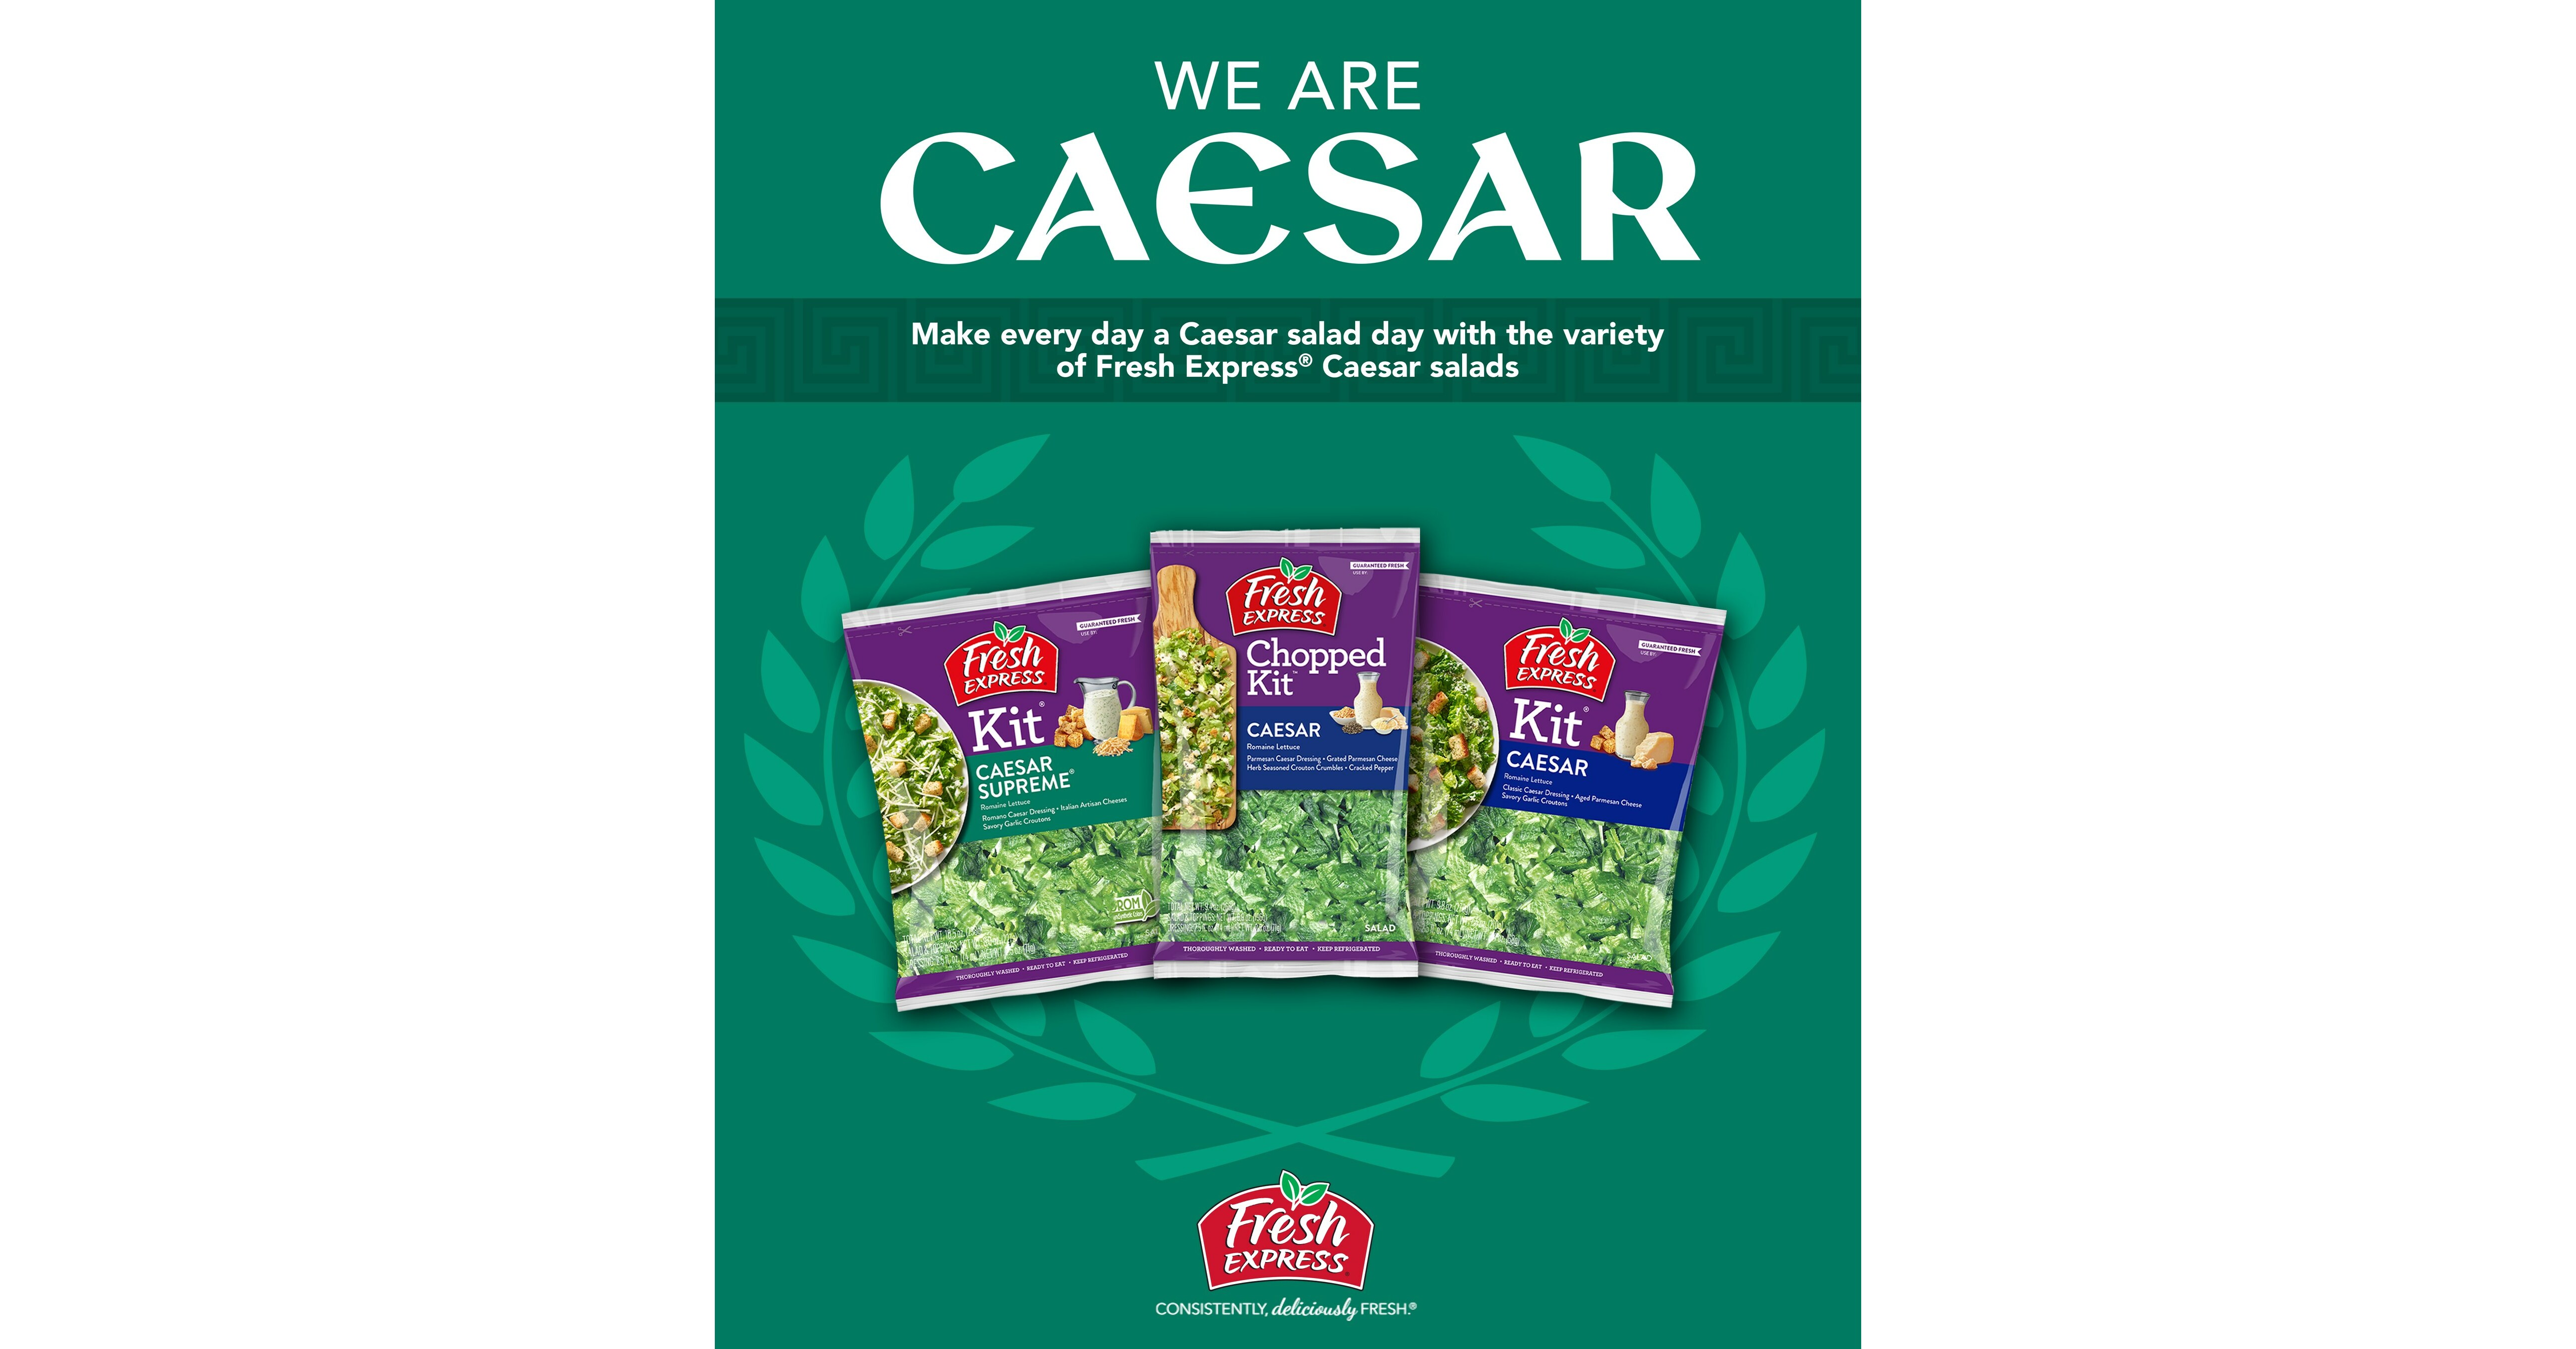 Fresh Express Caesar Supreme Salad Kit - 10.5 Oz - Randalls